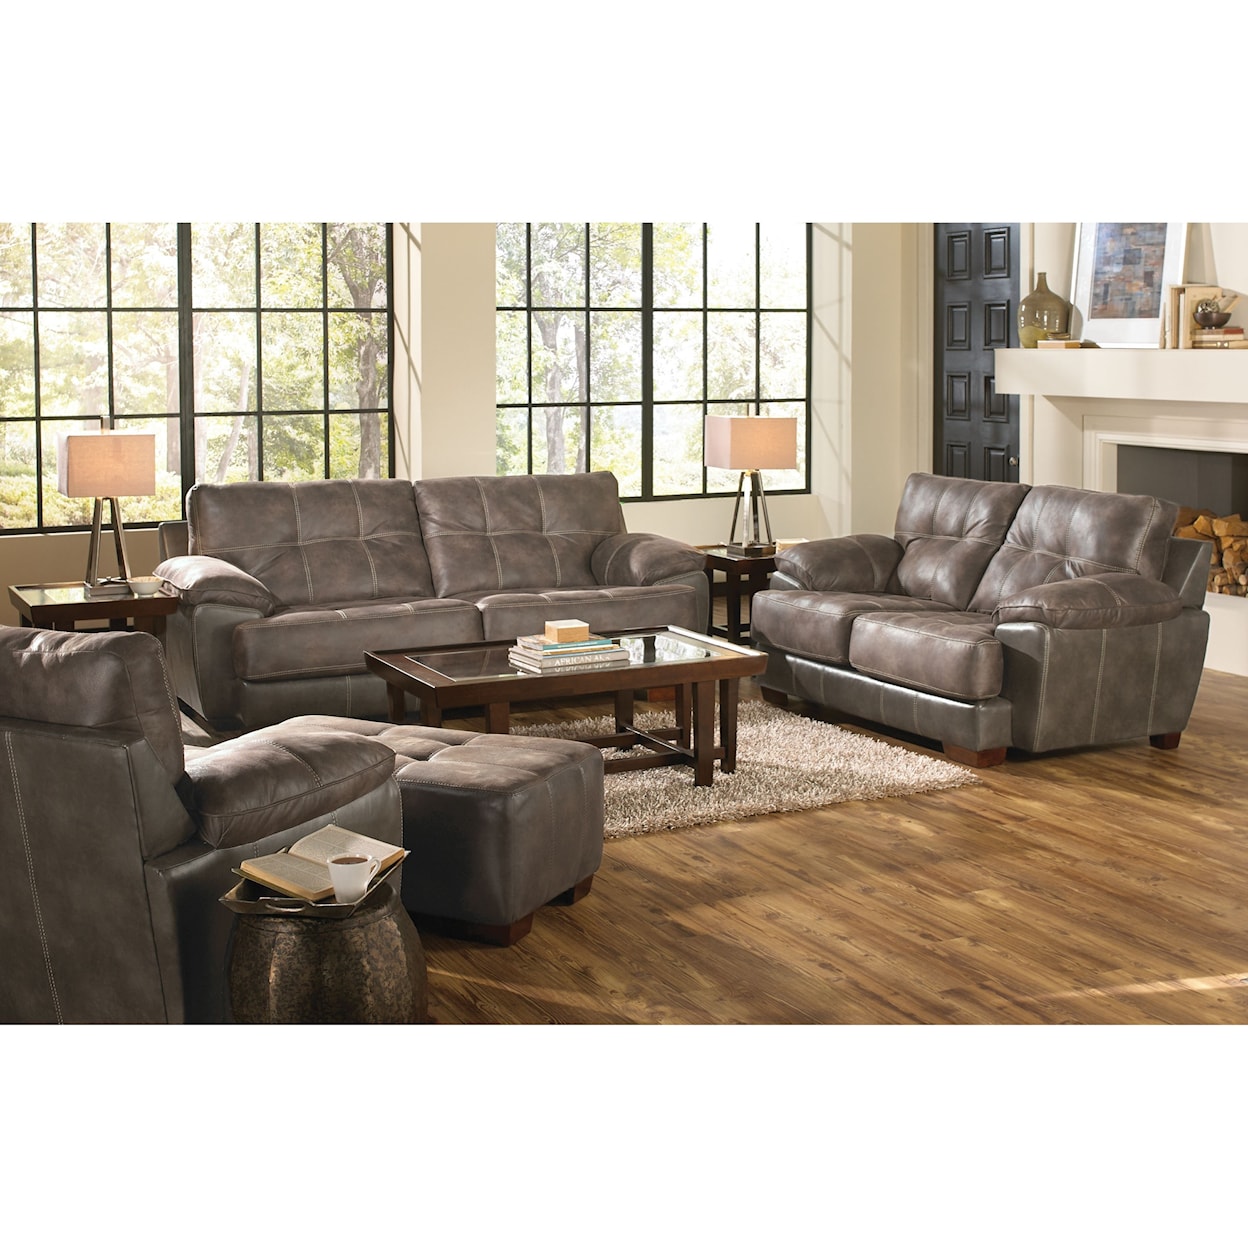 Jackson Furniture 4296 Drummond Living Room Group